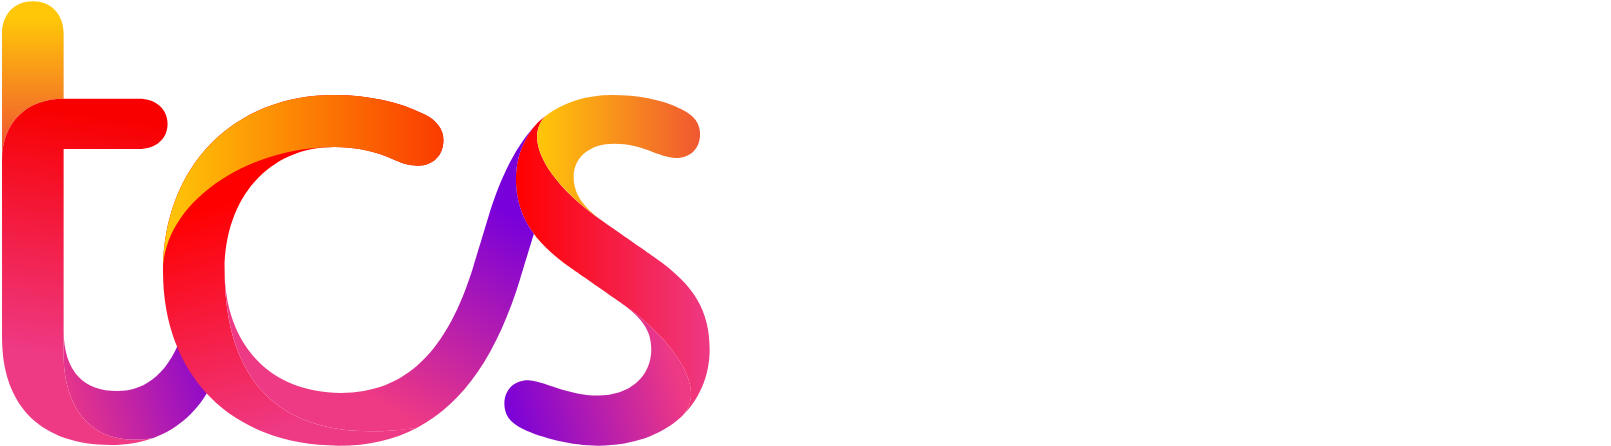 Tata Consultancy Services Logo groß für dunkle Hintergründe (transparentes PNG)